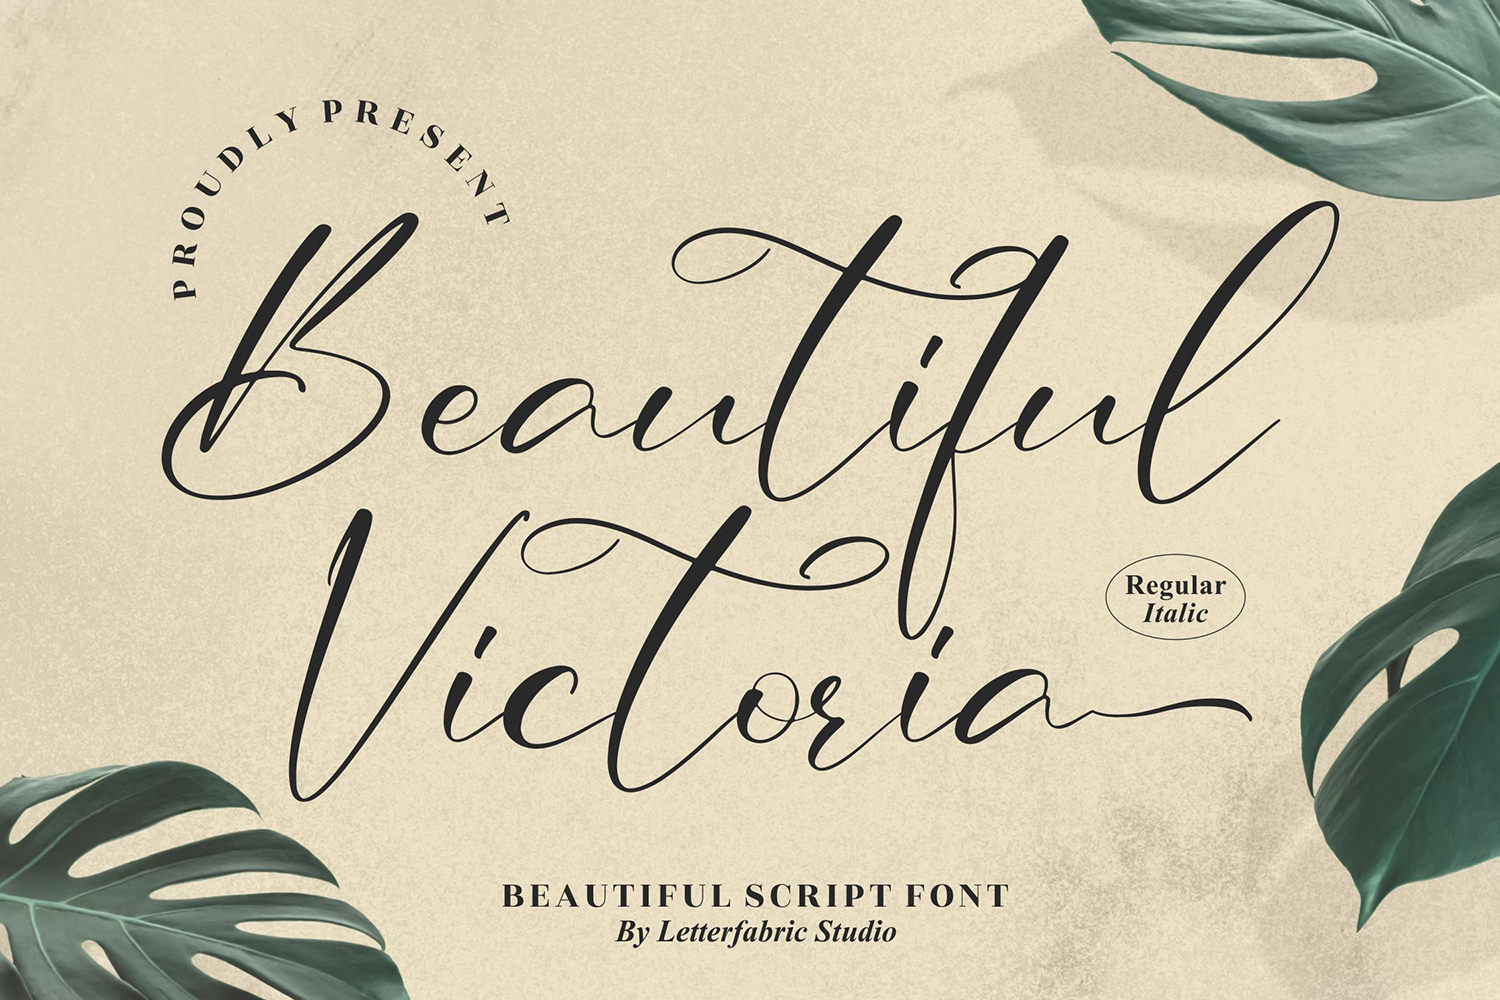 Beautiful Victoria Free Font